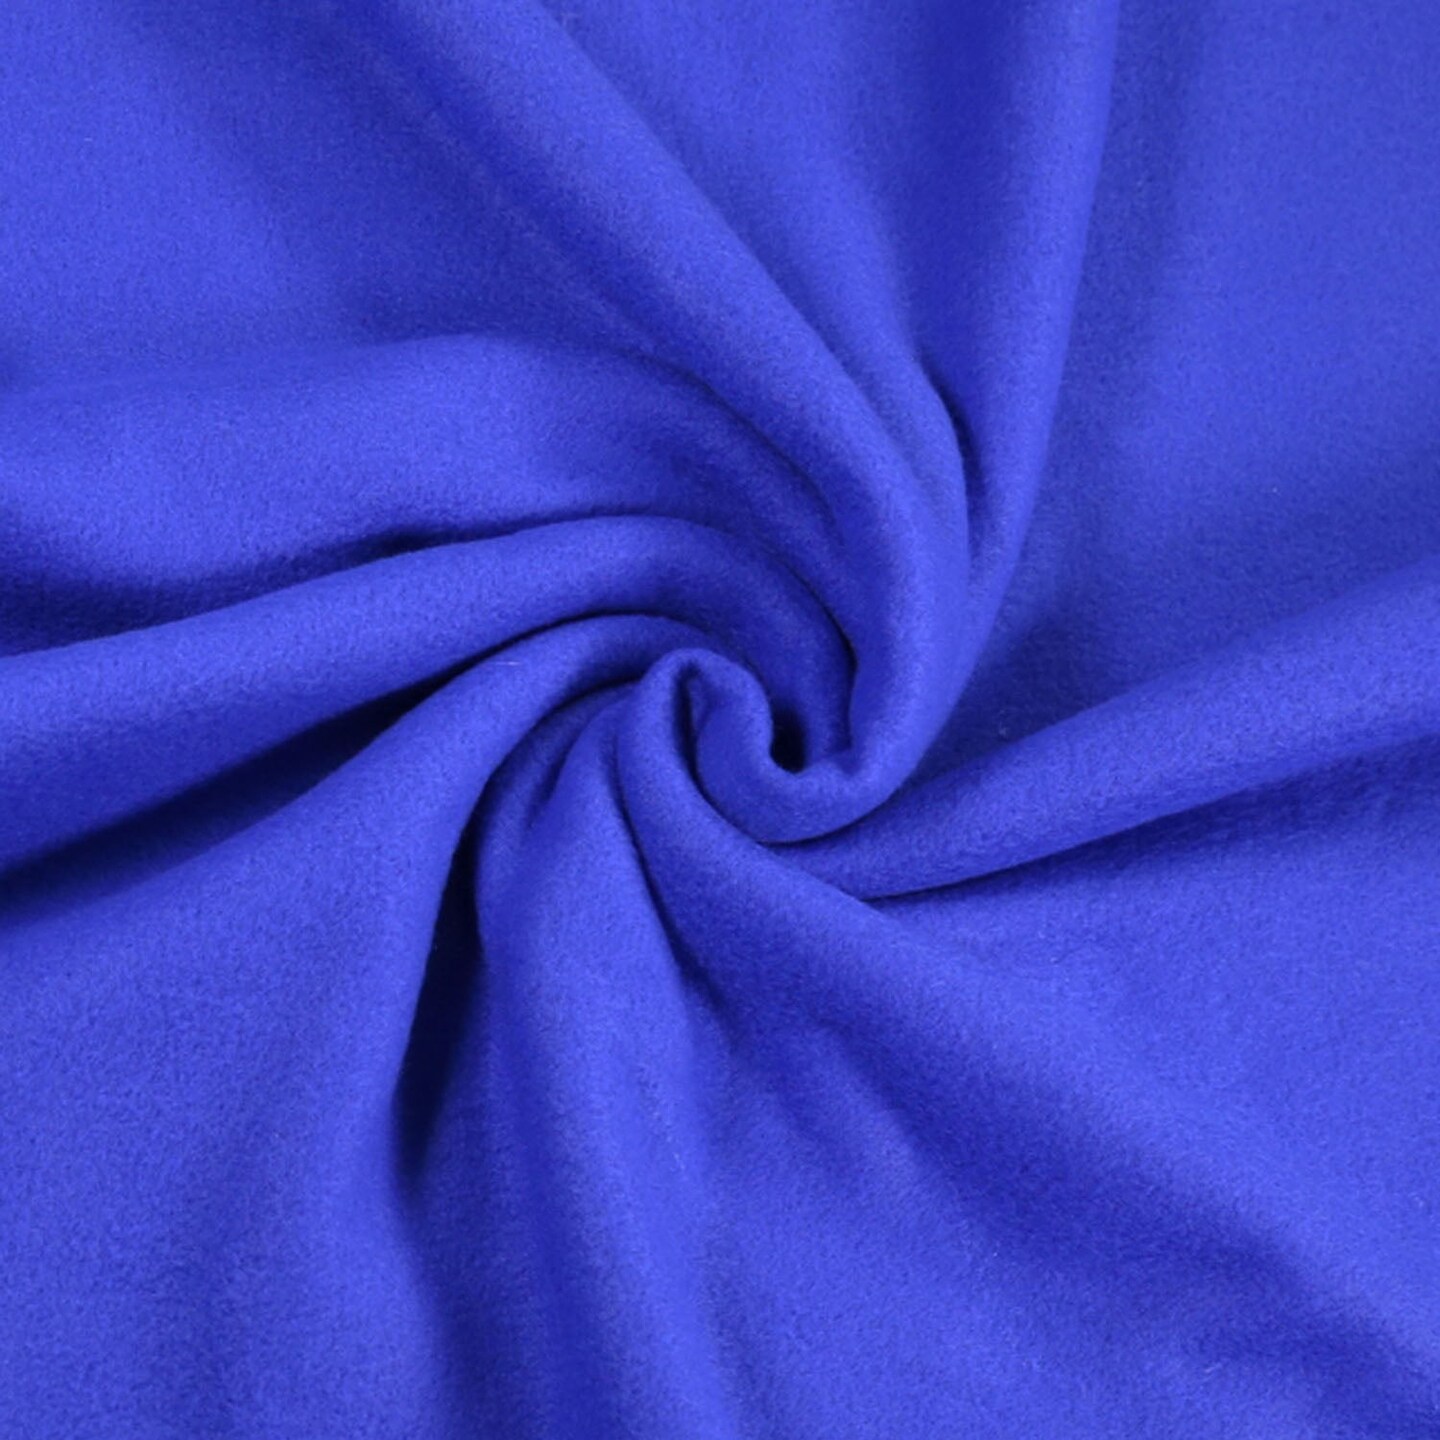 FabricLA | Fleece Fabric By The Yard | 36&#x22;X60&#x22; Inch Wide | Anti Pill Polar Fleece | Soft, Blanket, Throw, Poncho, Pillow Cover, PJ Pants, Booties, Eye Mask - Royal Blue (1 Yard)